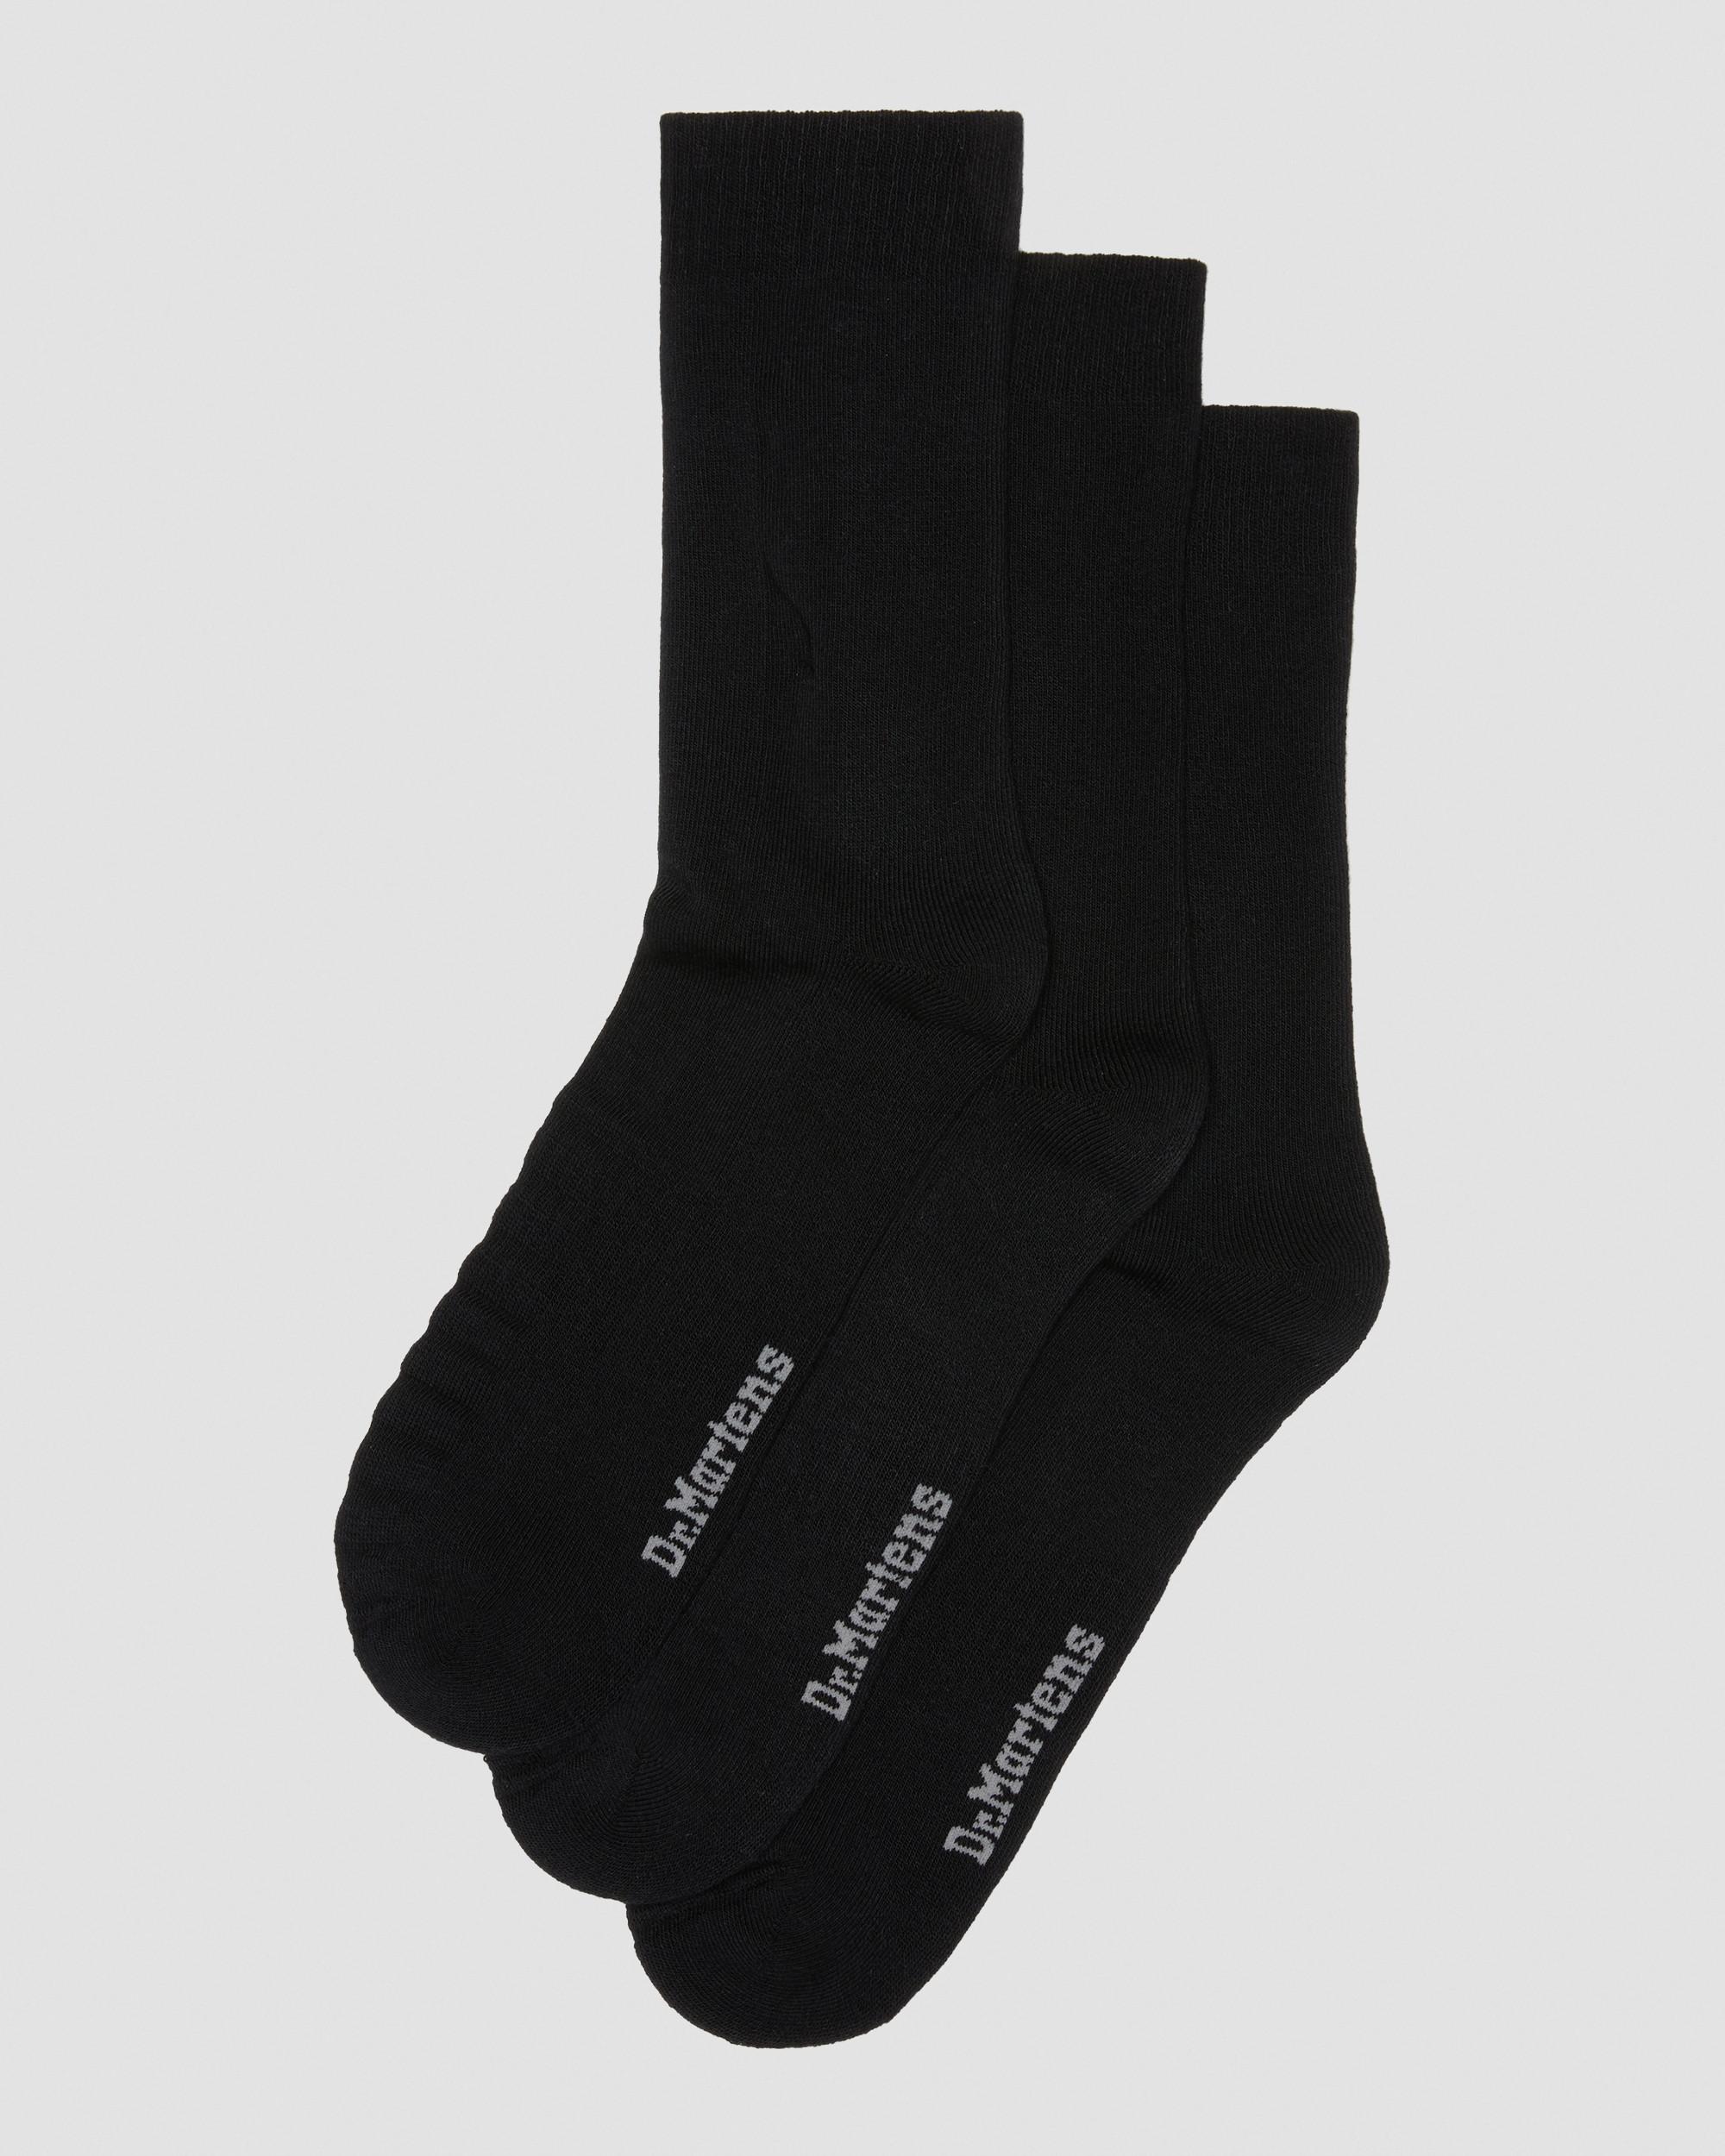 Double Doc Organic Cotton Blend 3-Pack Socks in Black